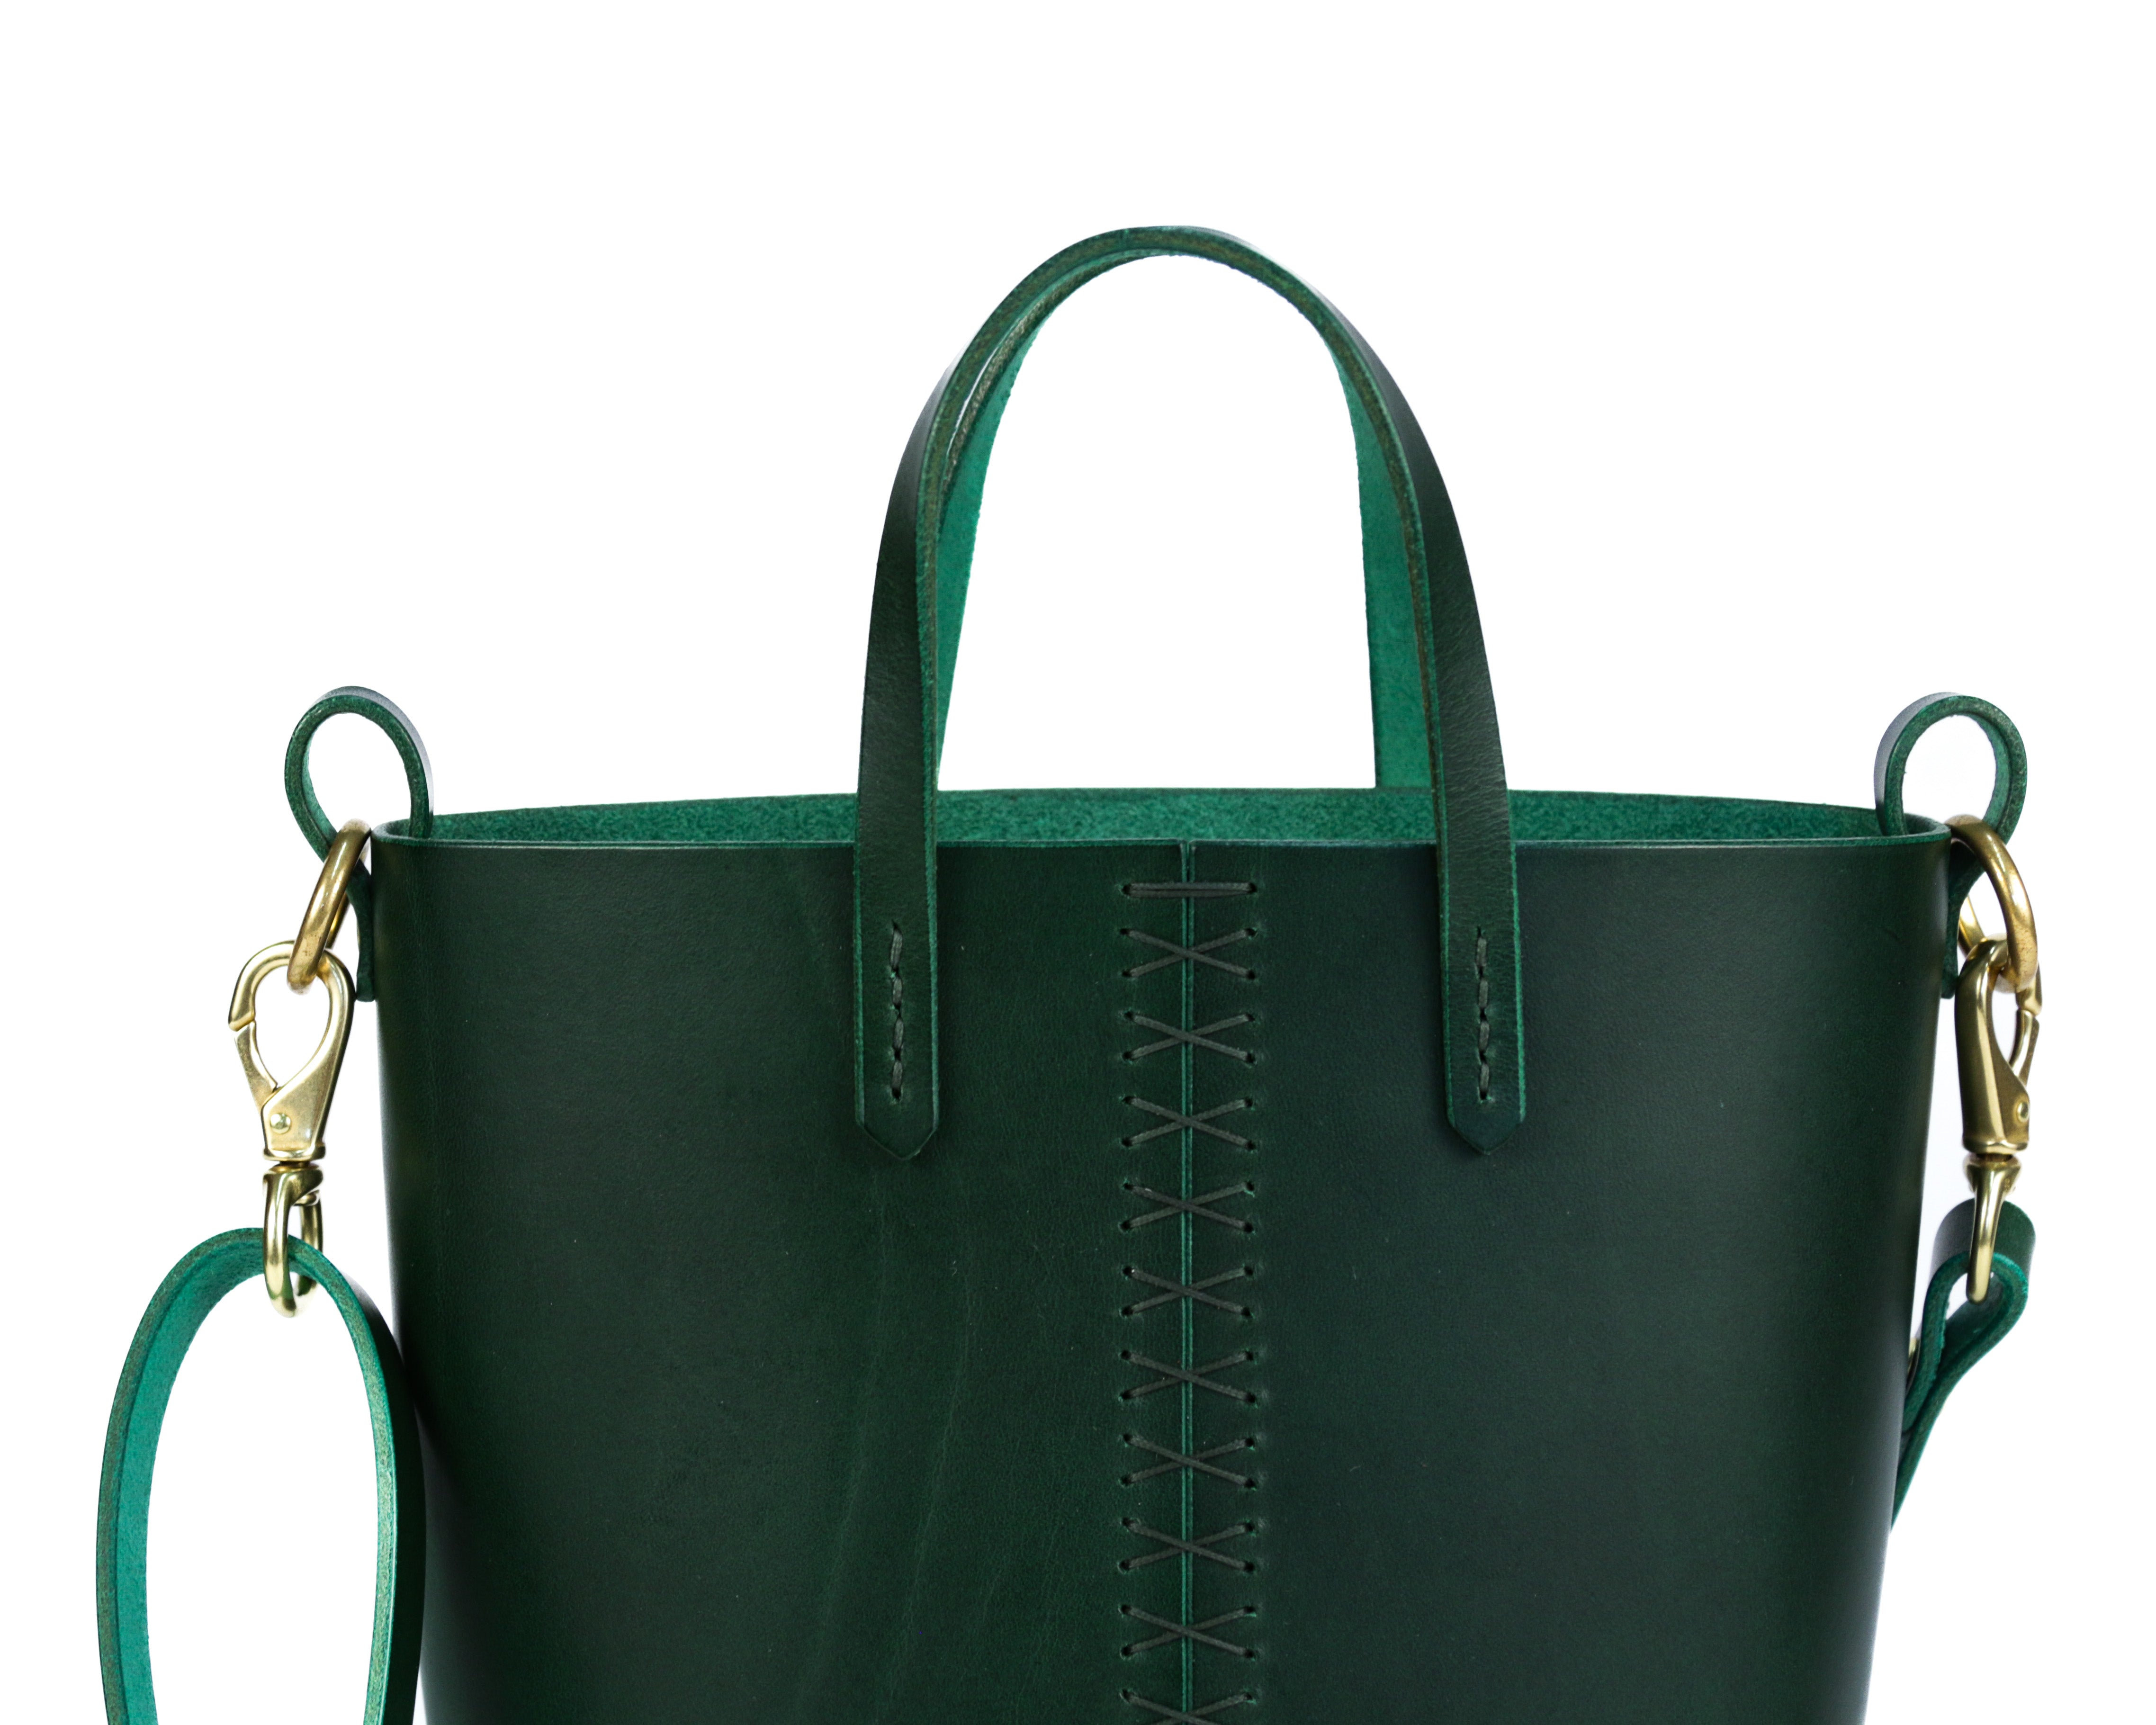 Palmetto Bucket Bag: Tan